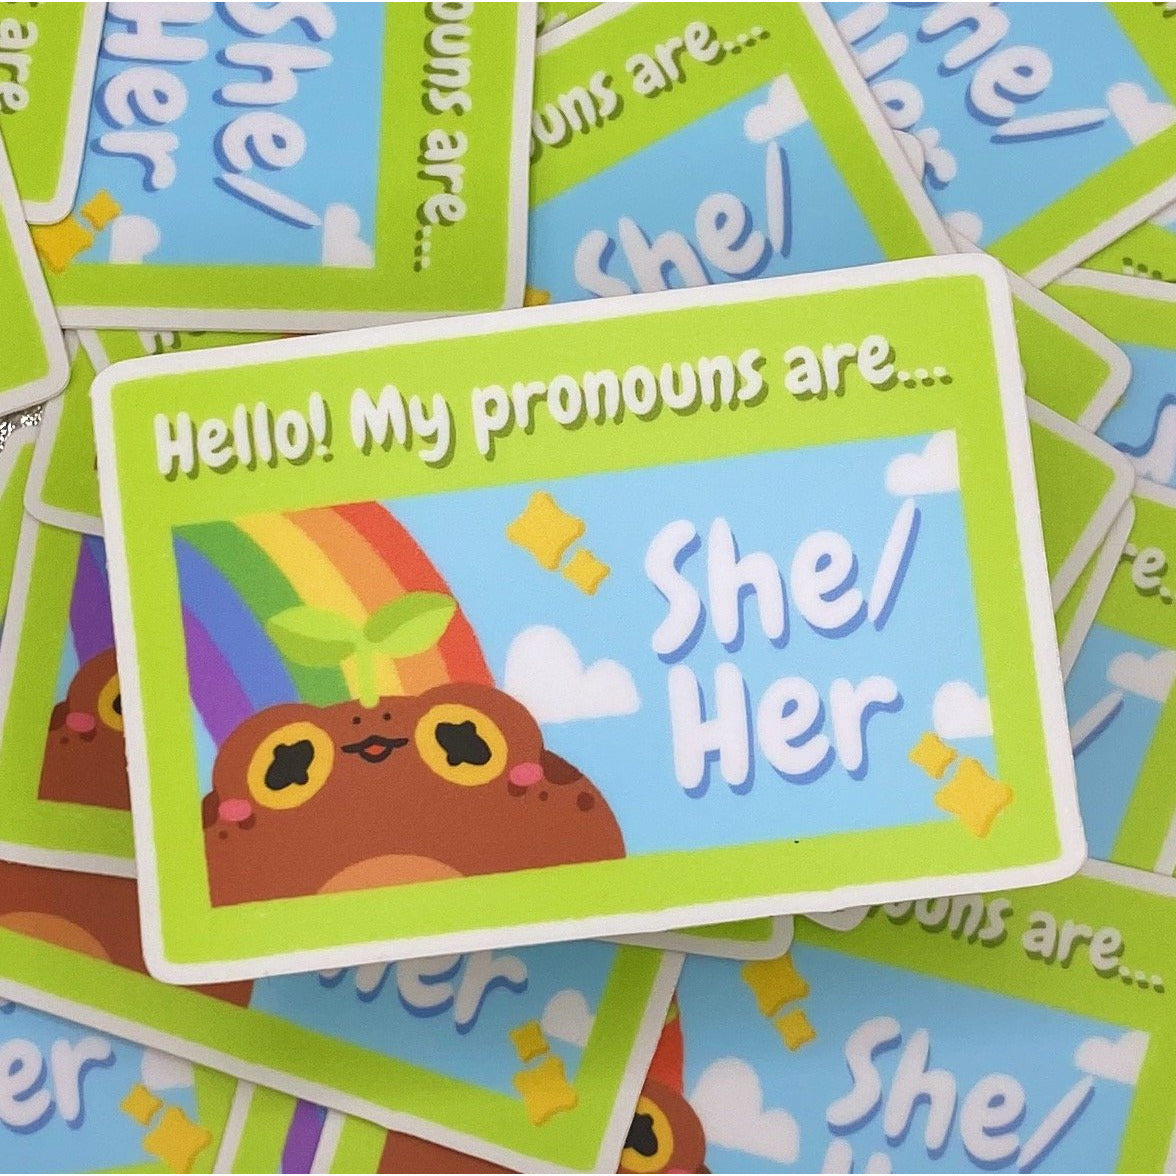 She/Her Meep Sticker